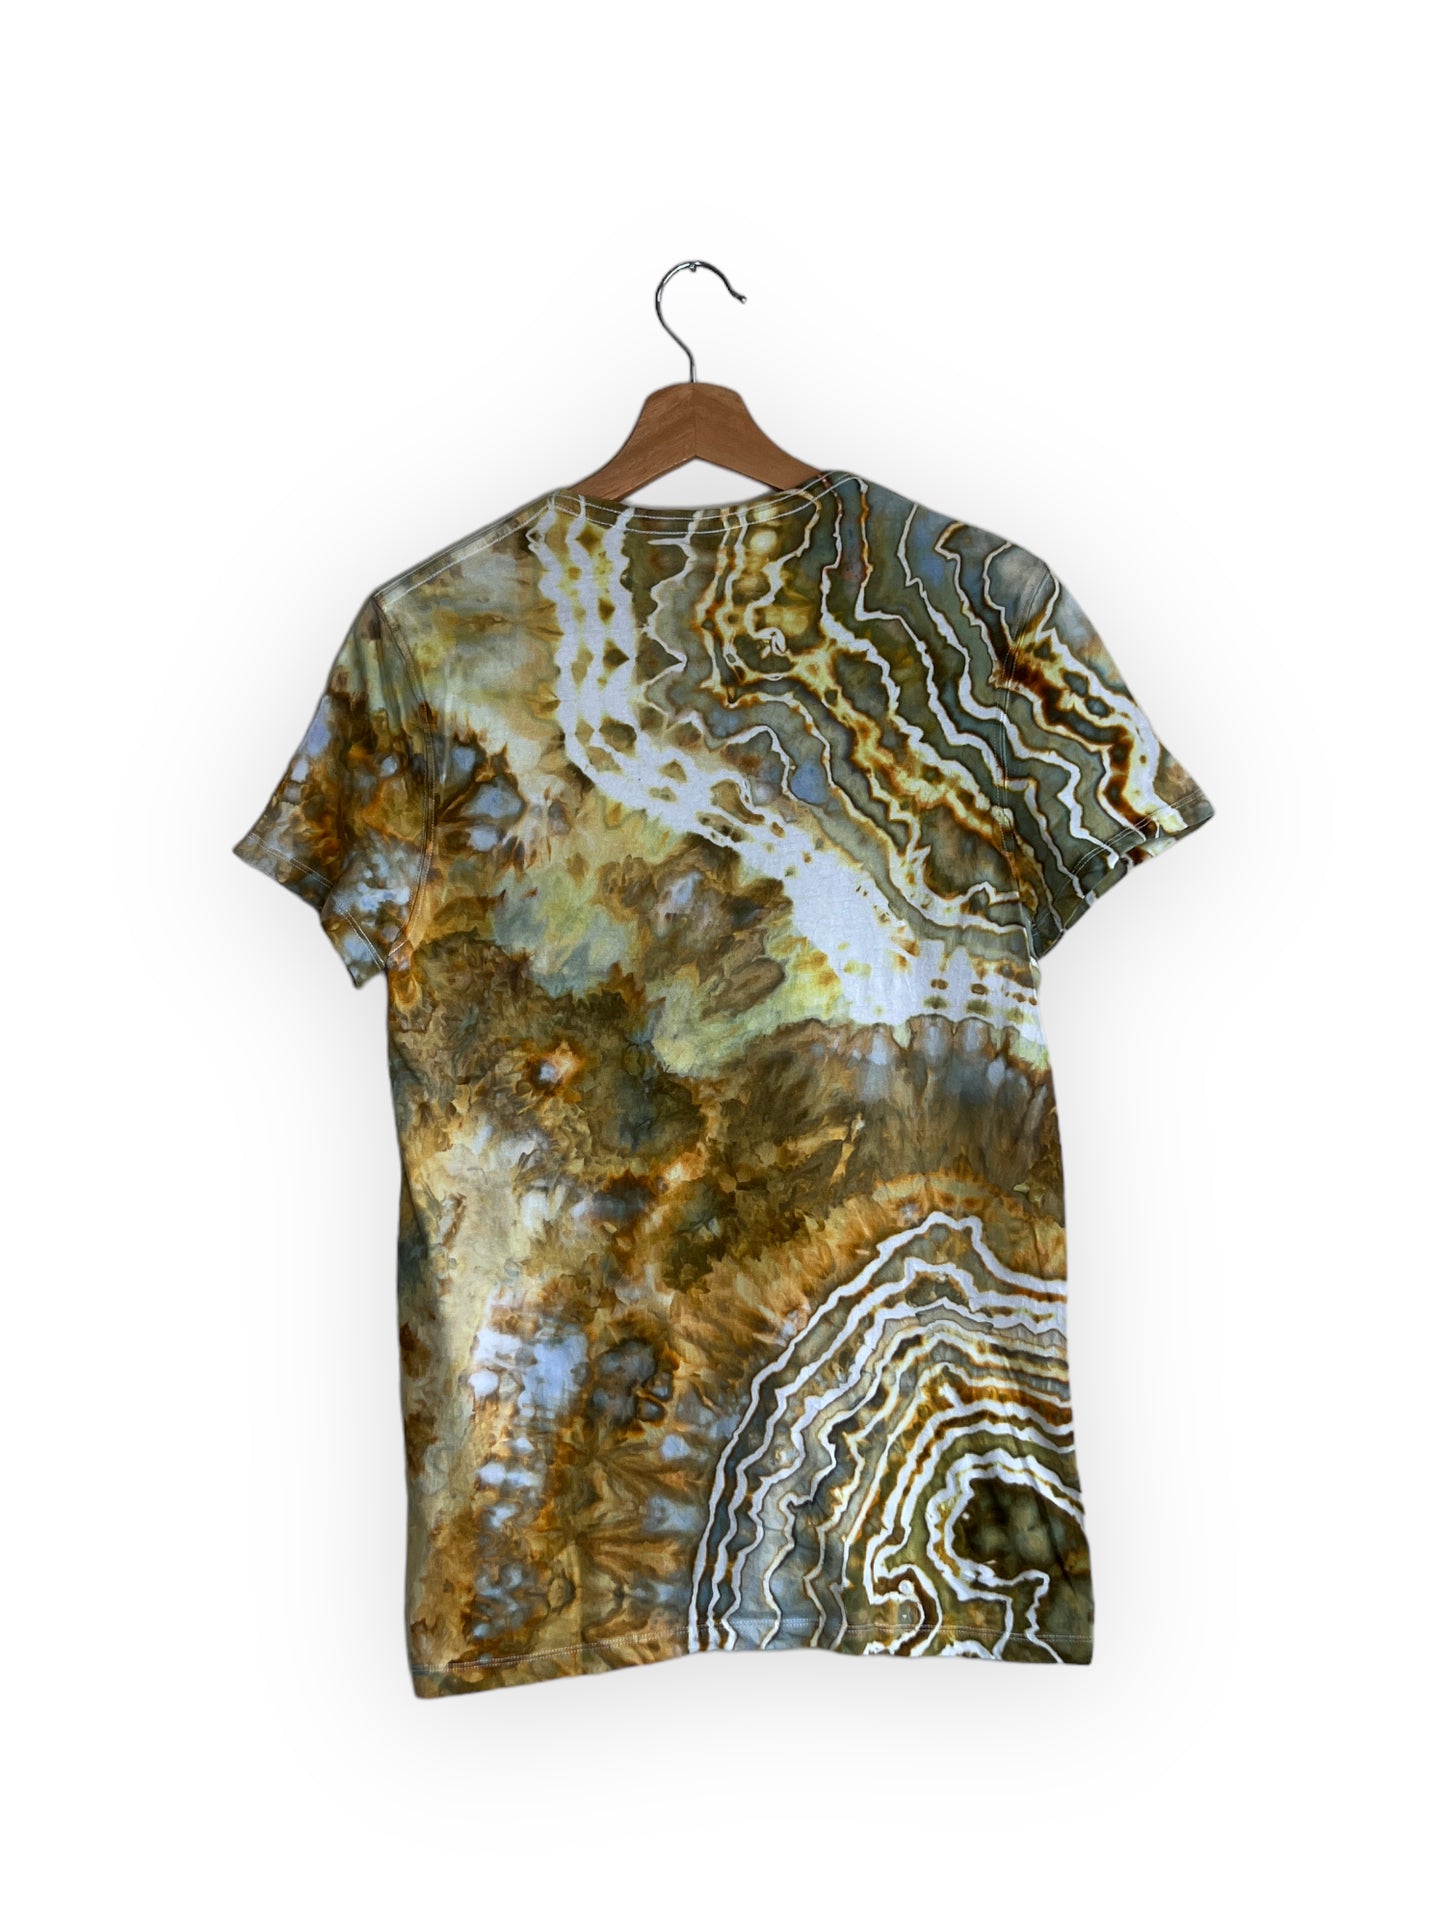 Burnished Sand Geode T-Shirt (S)